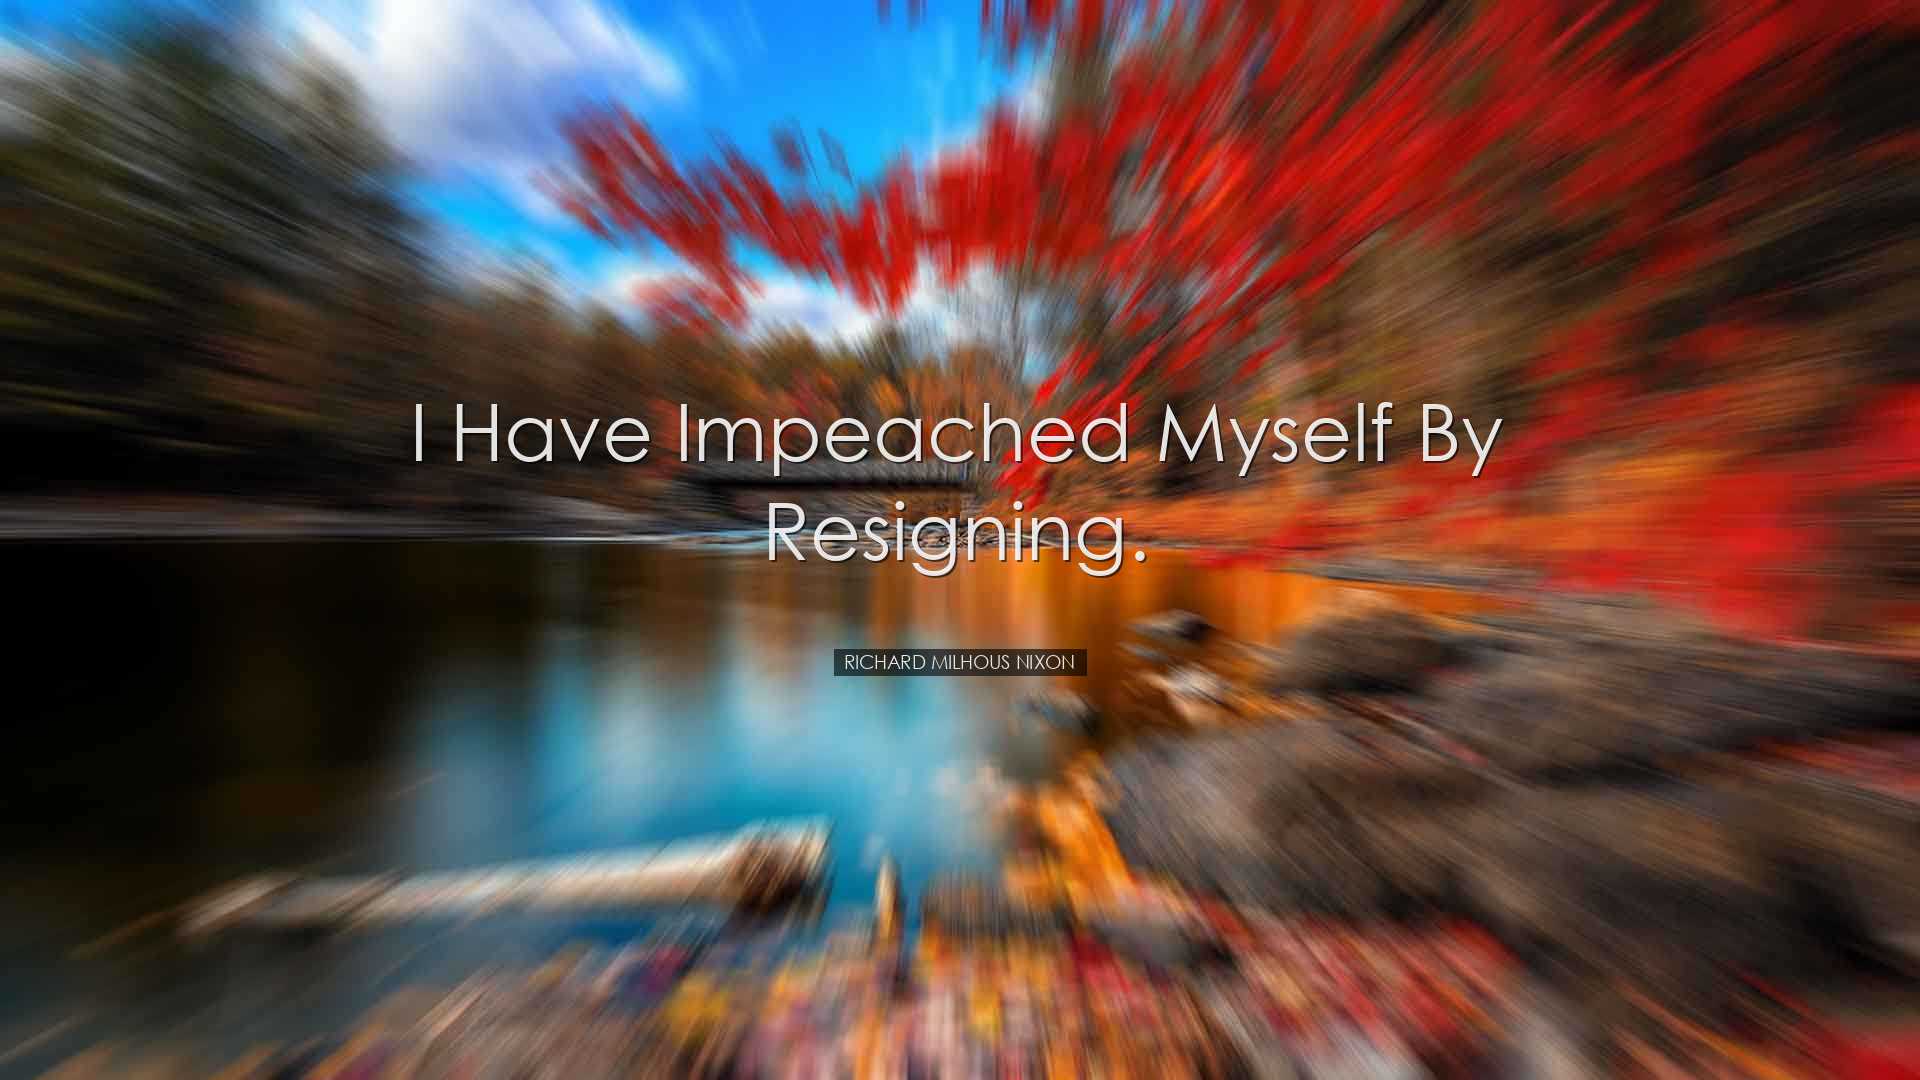 I have impeached myself by resigning. - Richard Milhous Nixon